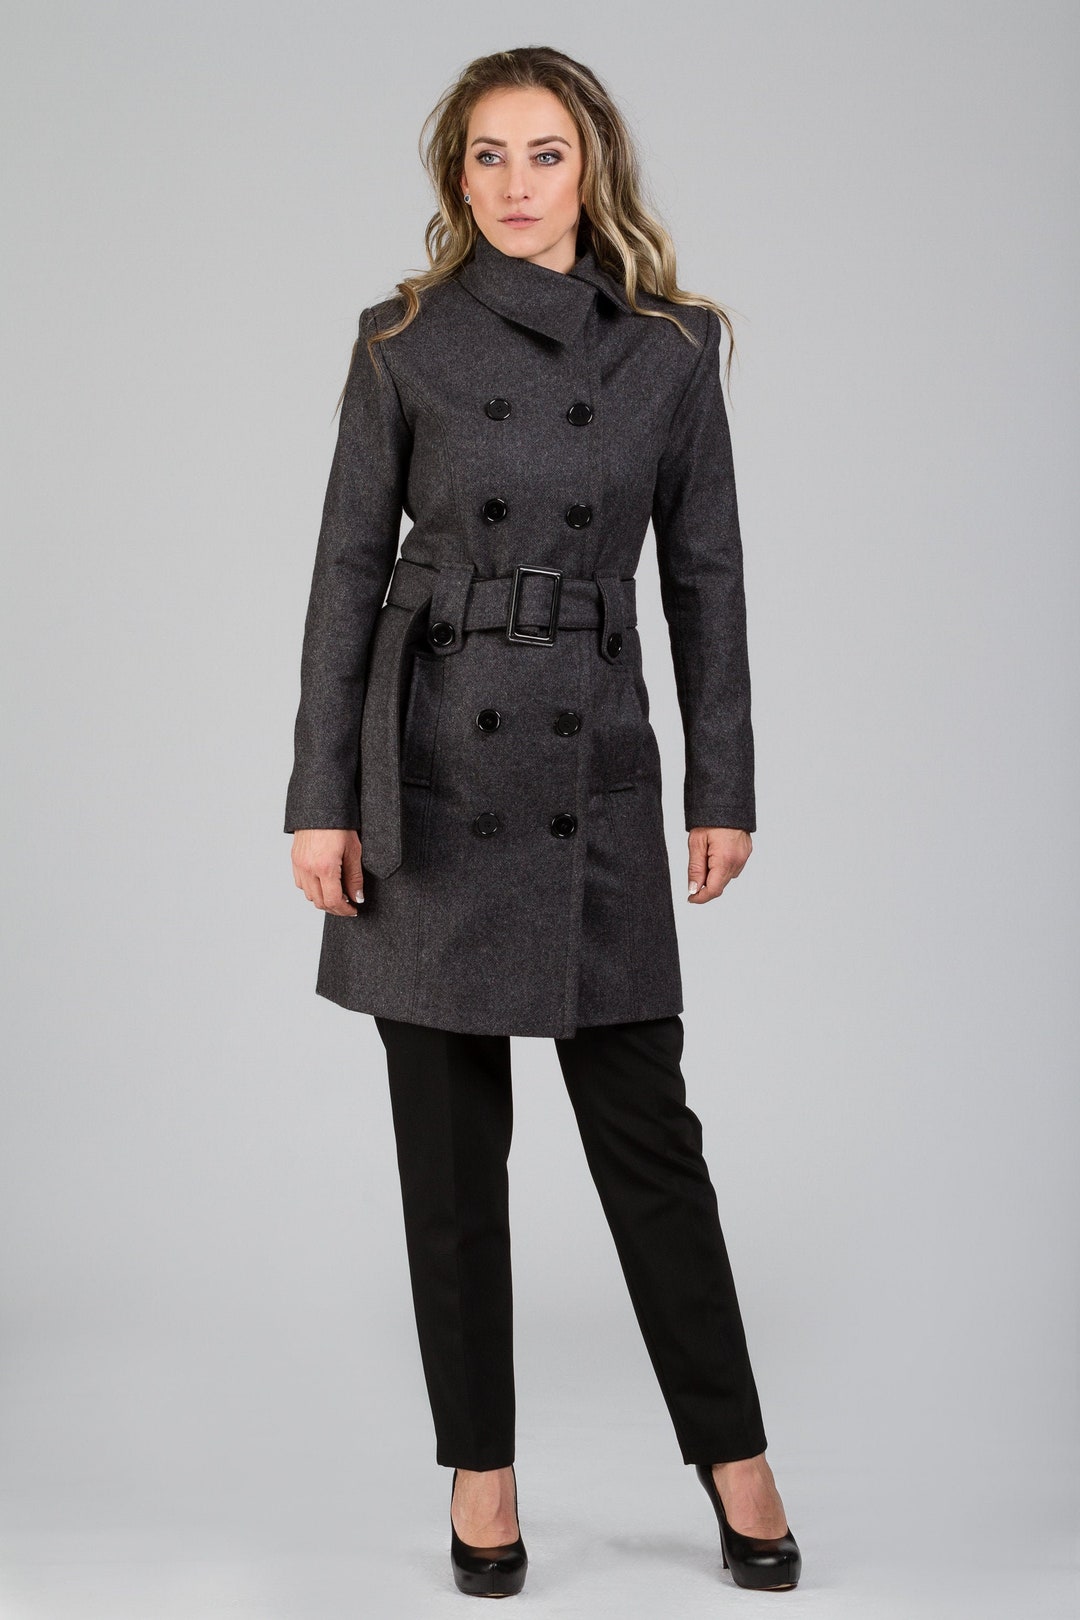 High Collar Coat Grey Wool Coat Cashmere Coat Mother's - Etsy